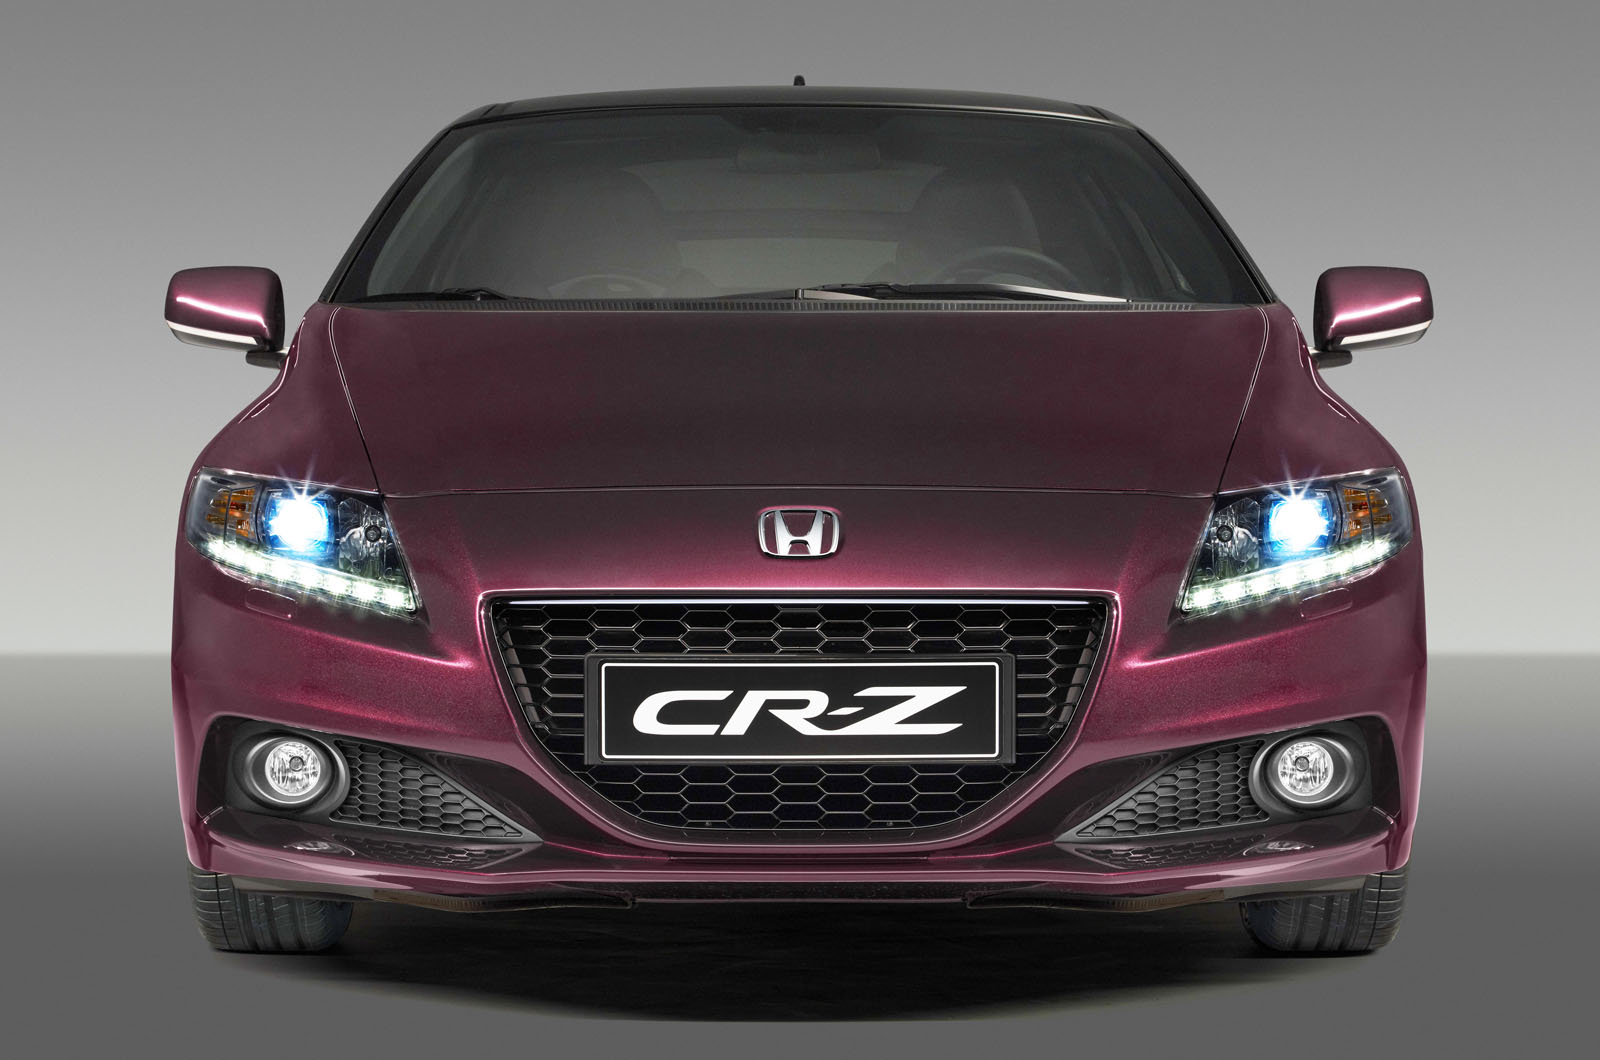 Used car buying guide: Honda CR-Z